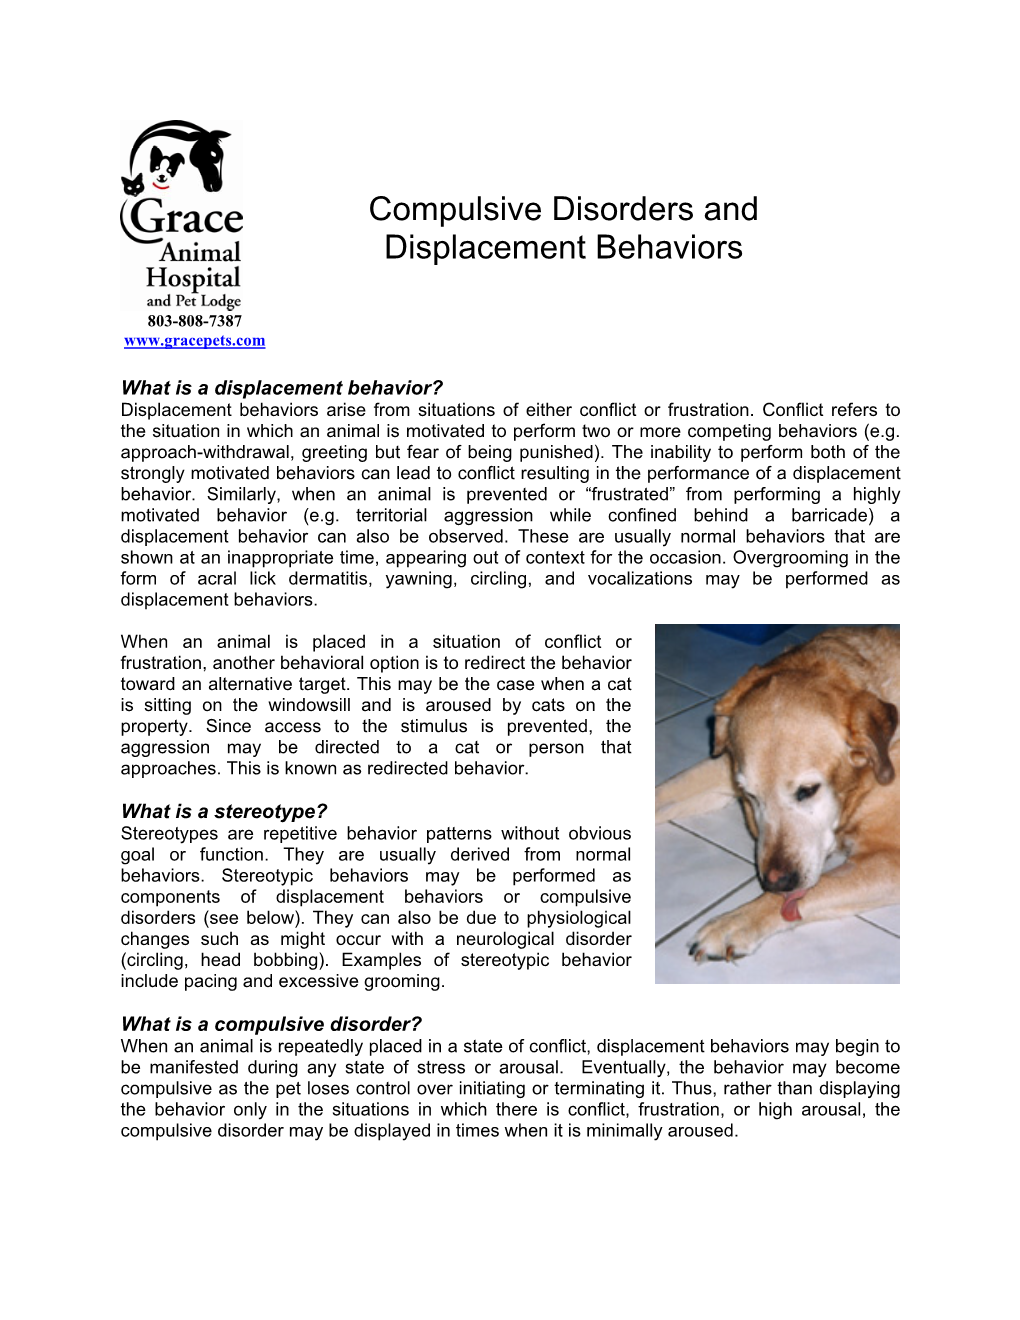 Compulsive Disorders and Displacement Behaviors